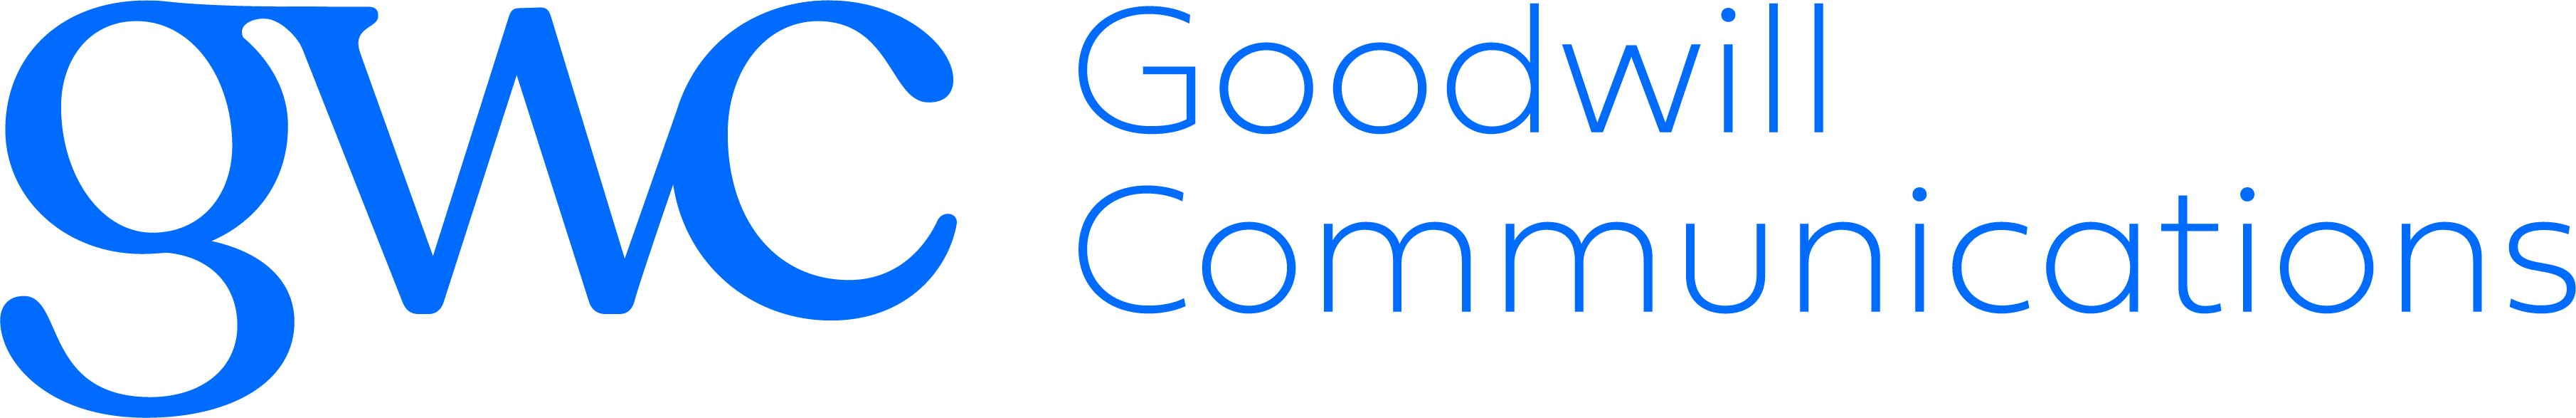 Goodwill_logo-1